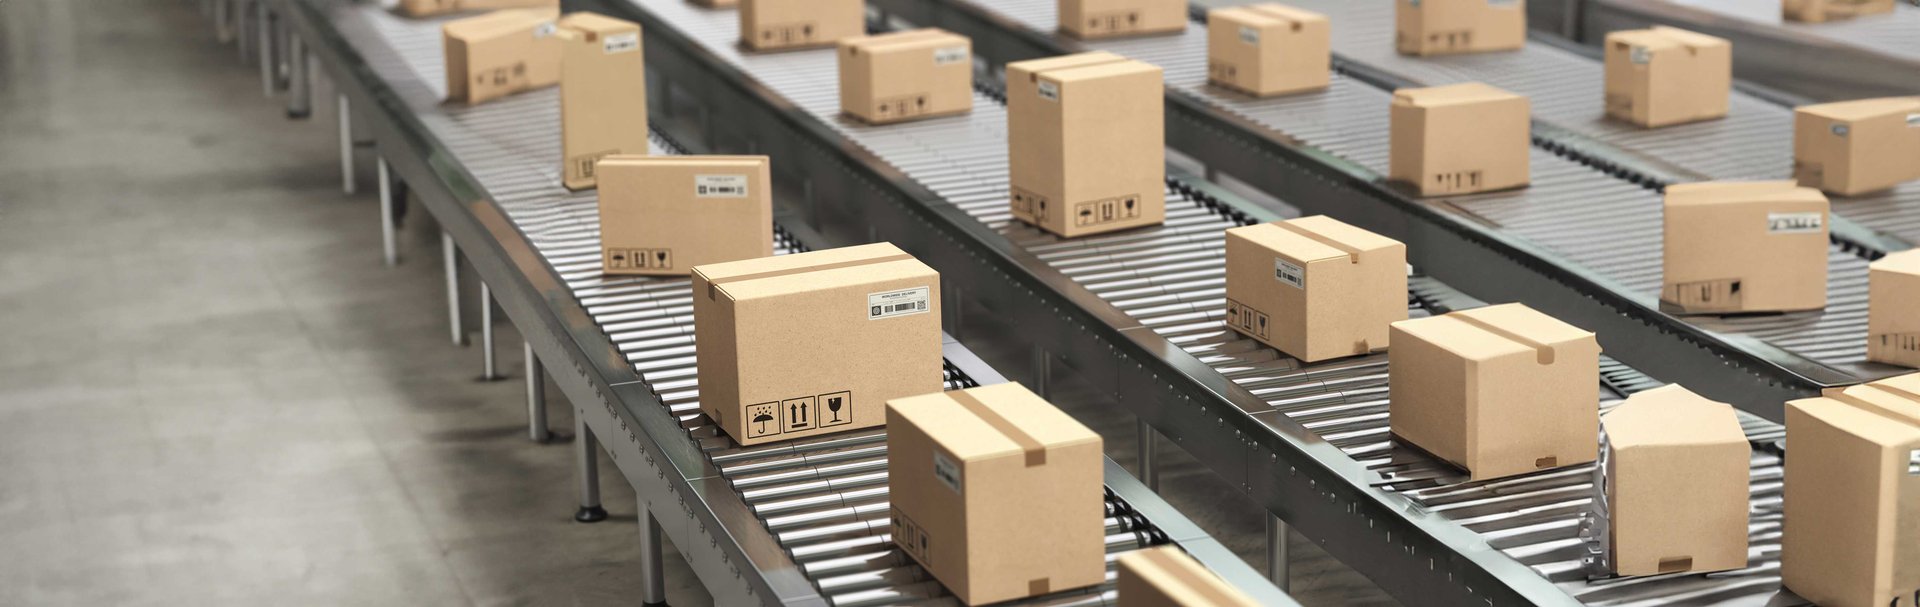 cardboard-boxes-on-conveyor-roller-in-distribution-2023-11-27-05-29-43-utc